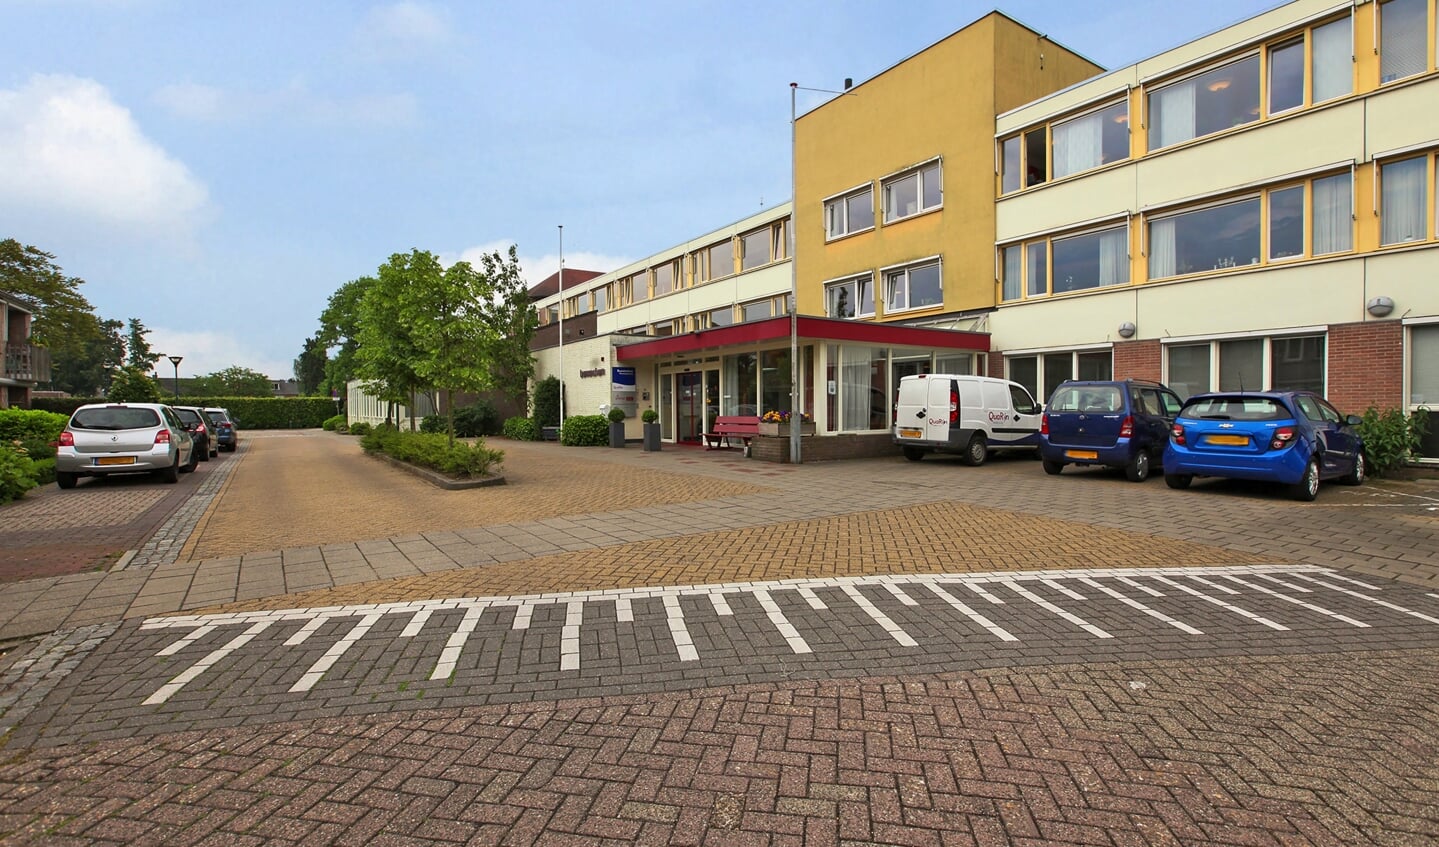 Woonzorgcentrum Bunninchem laat na een besmettingsgolf nog één bezoeker per bewoner per dag toe.